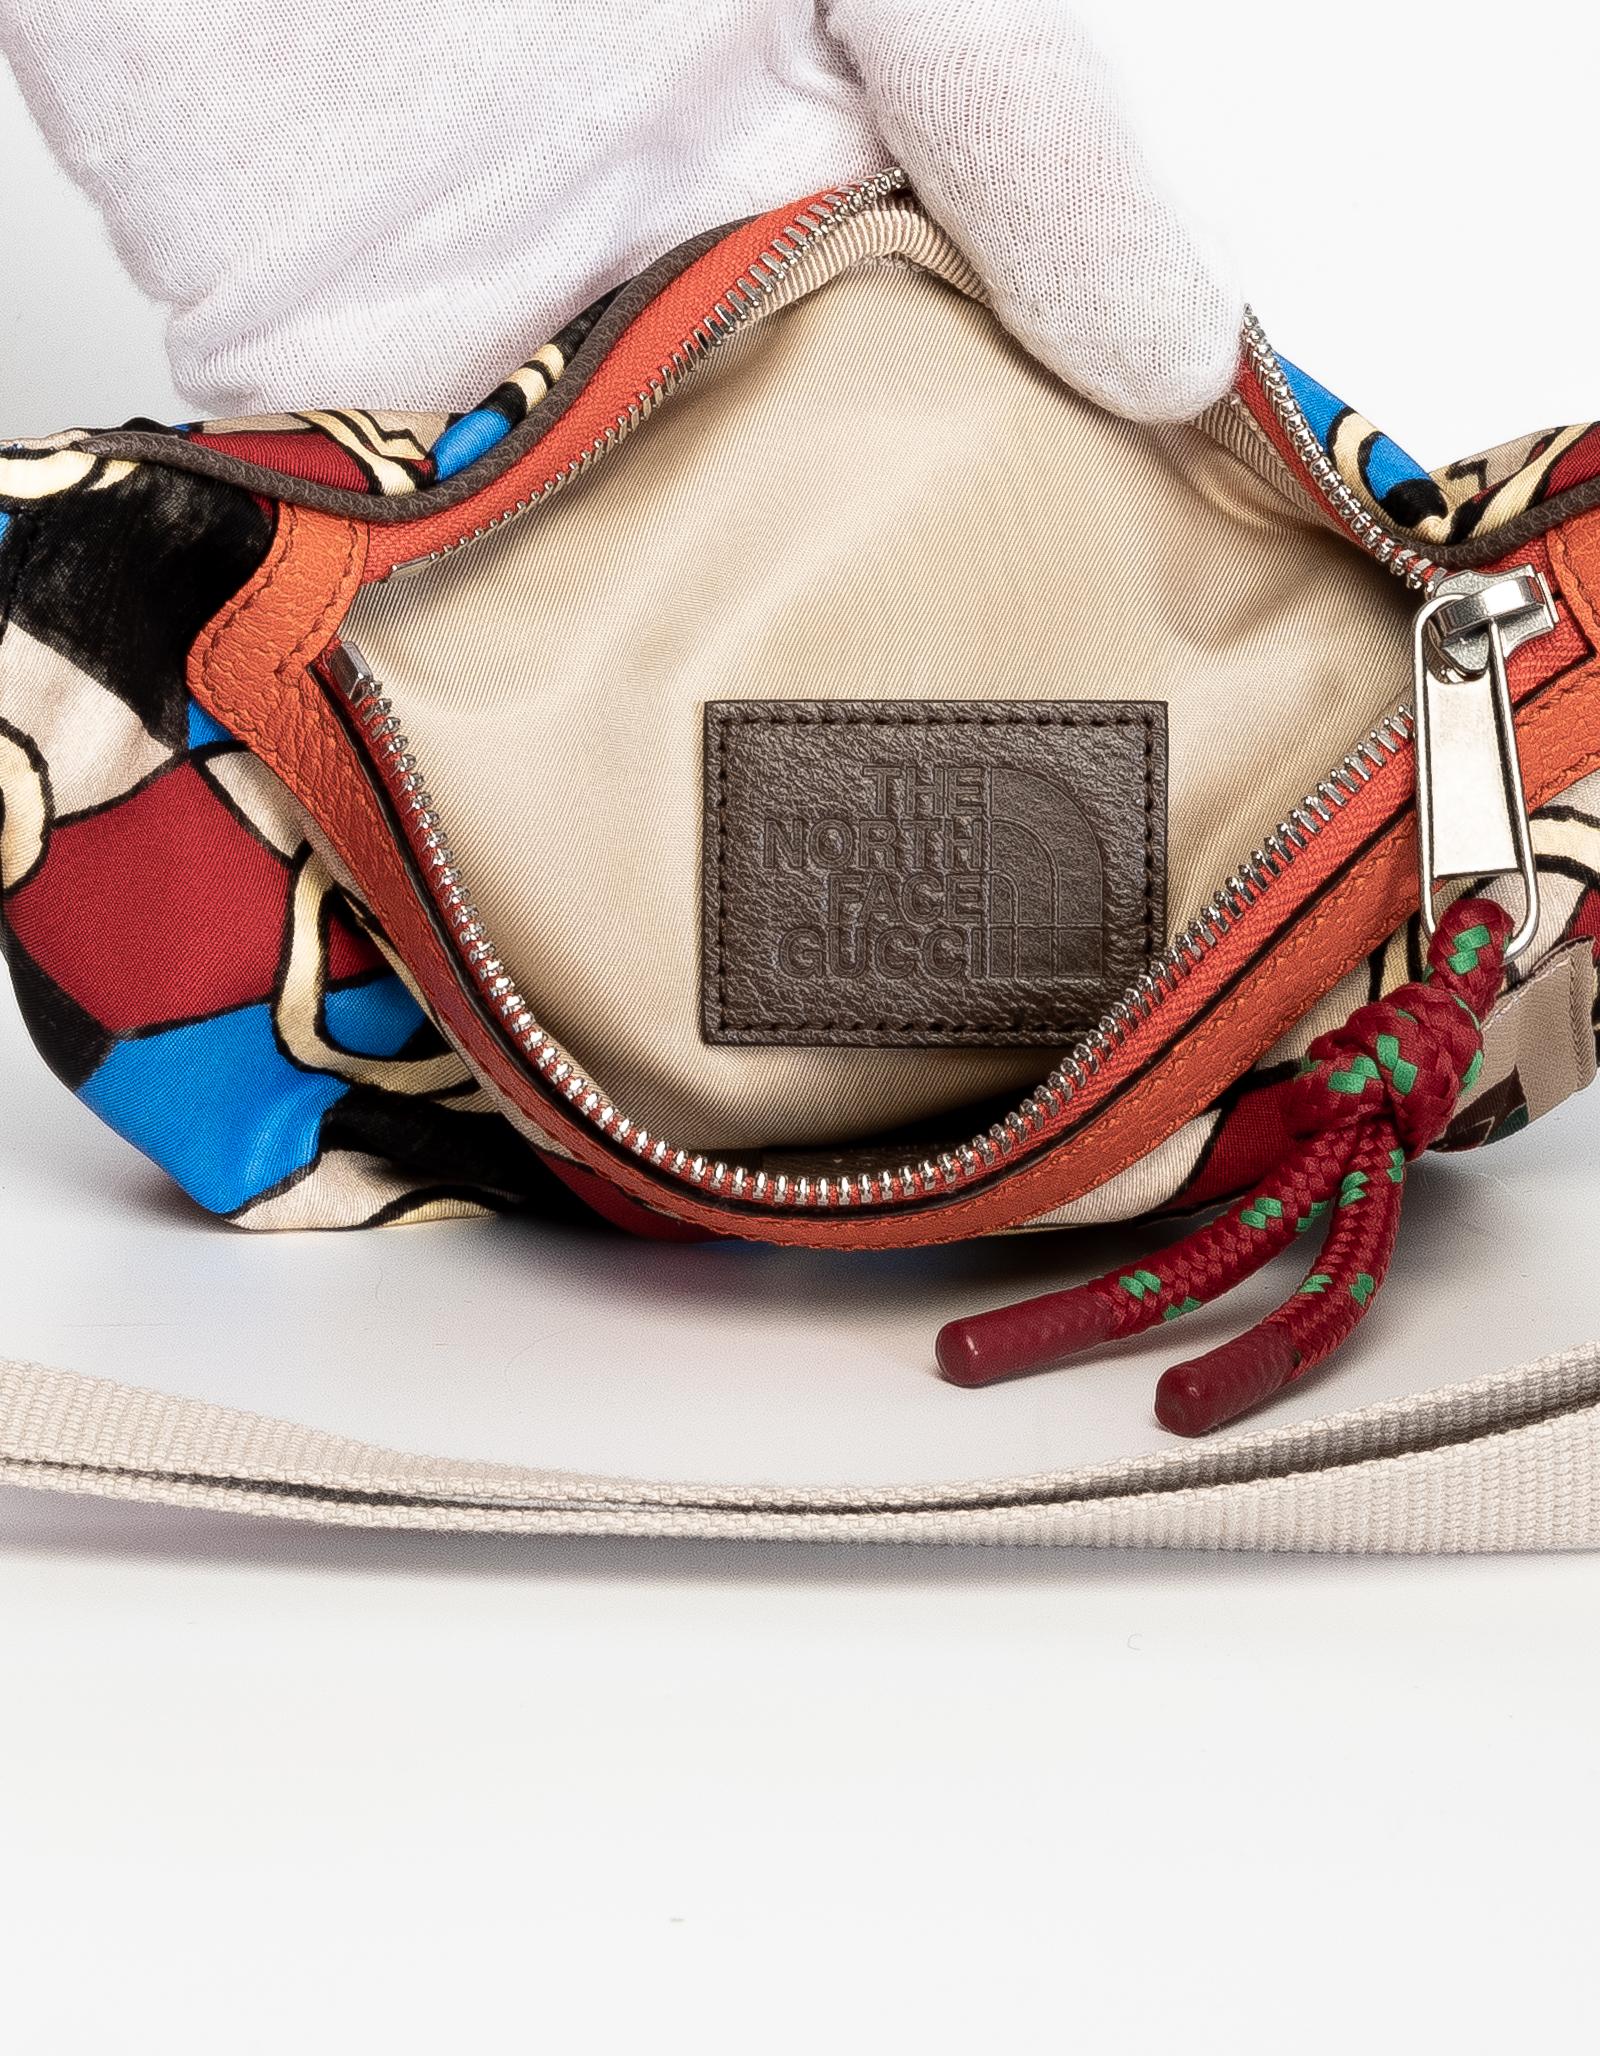 The North Face x Gucci Geometric Interlocking G Print Belt Bag